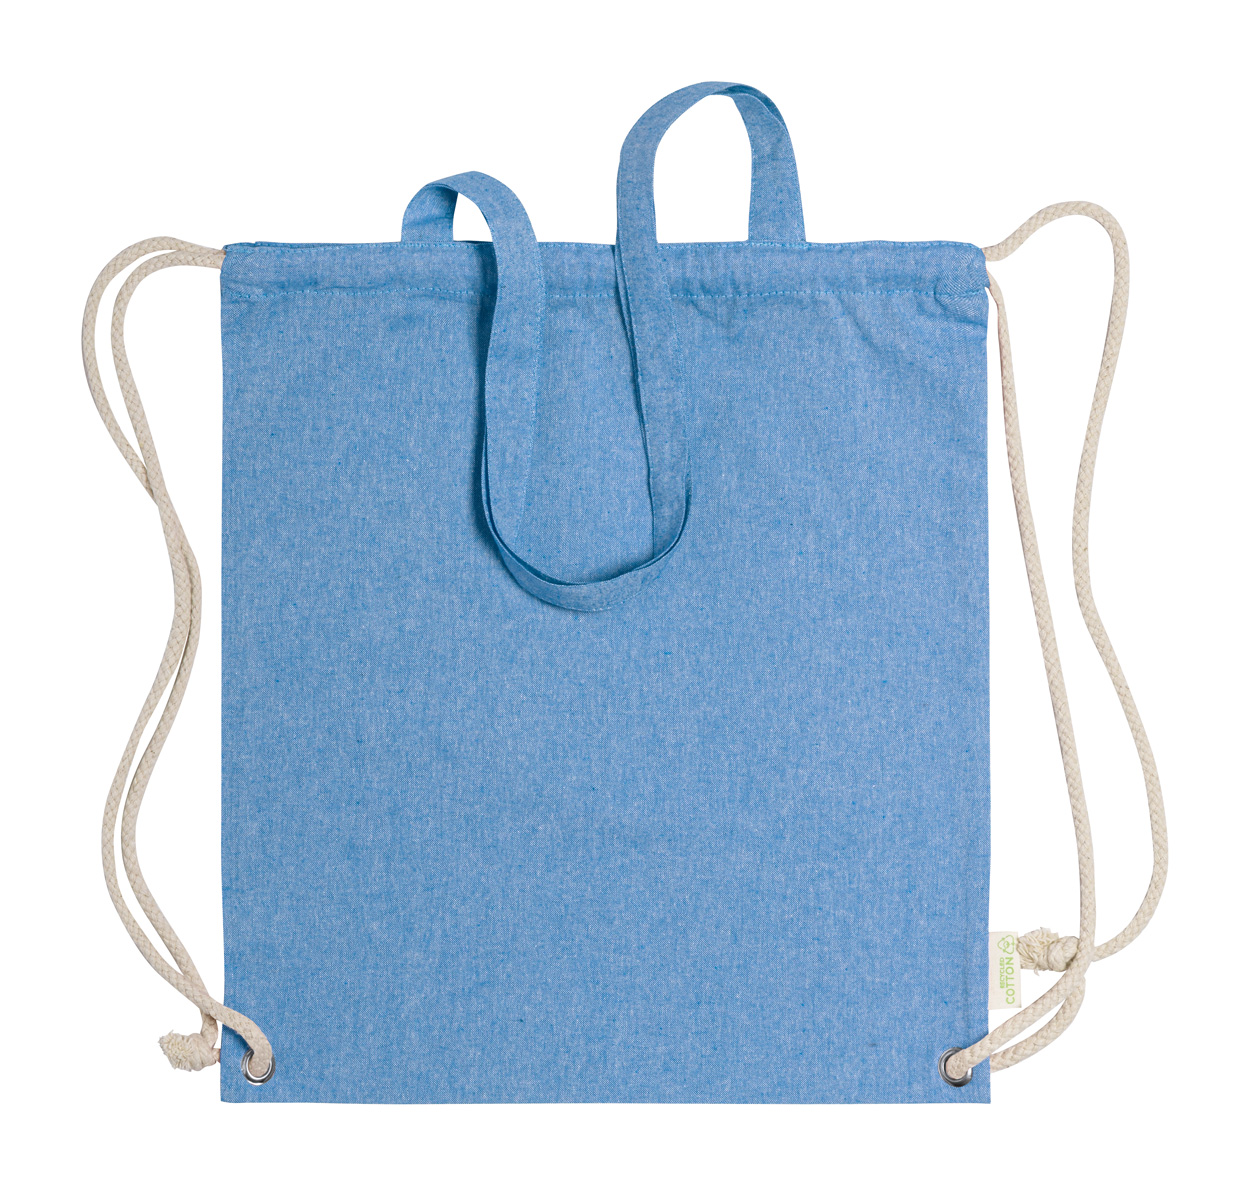 Fenin drawstring bag - blue